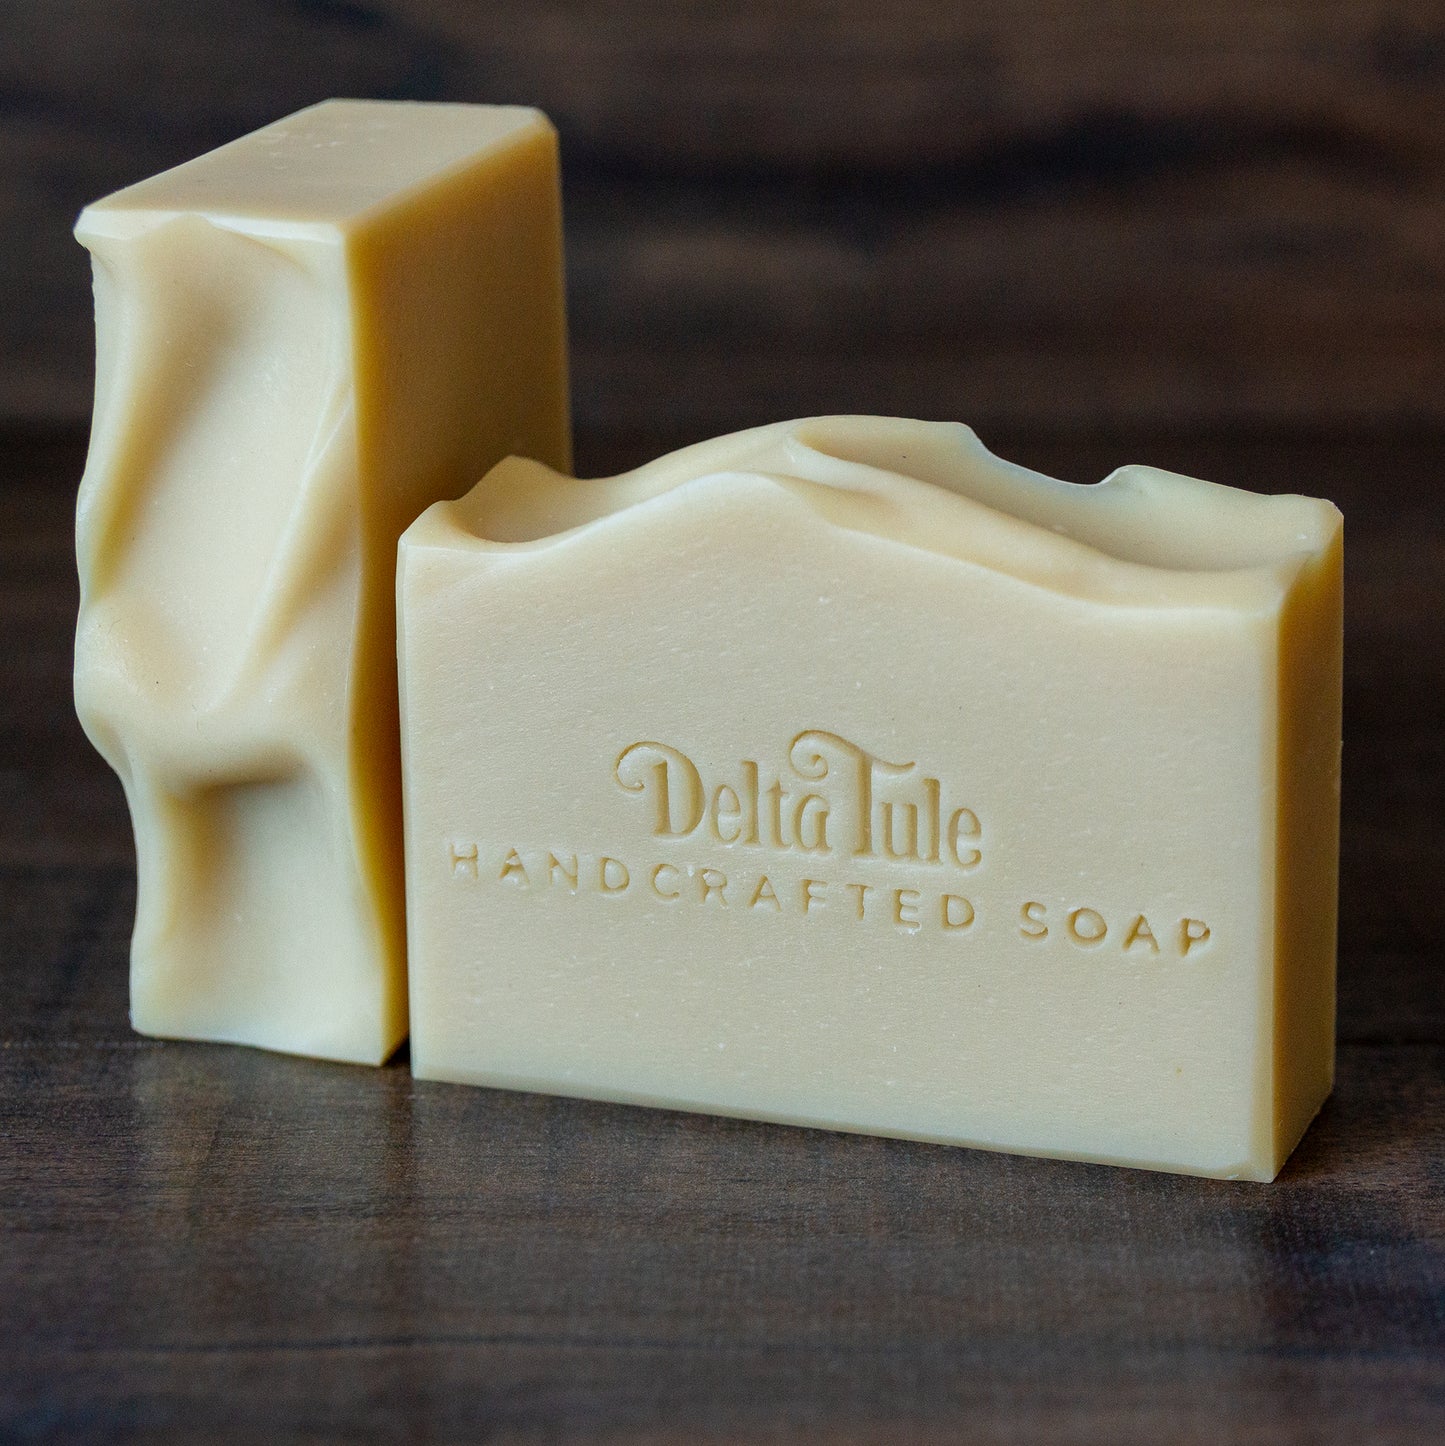 Mylk & Oats // Oatmeal Coconut Milk Unscented Double Butter Soap